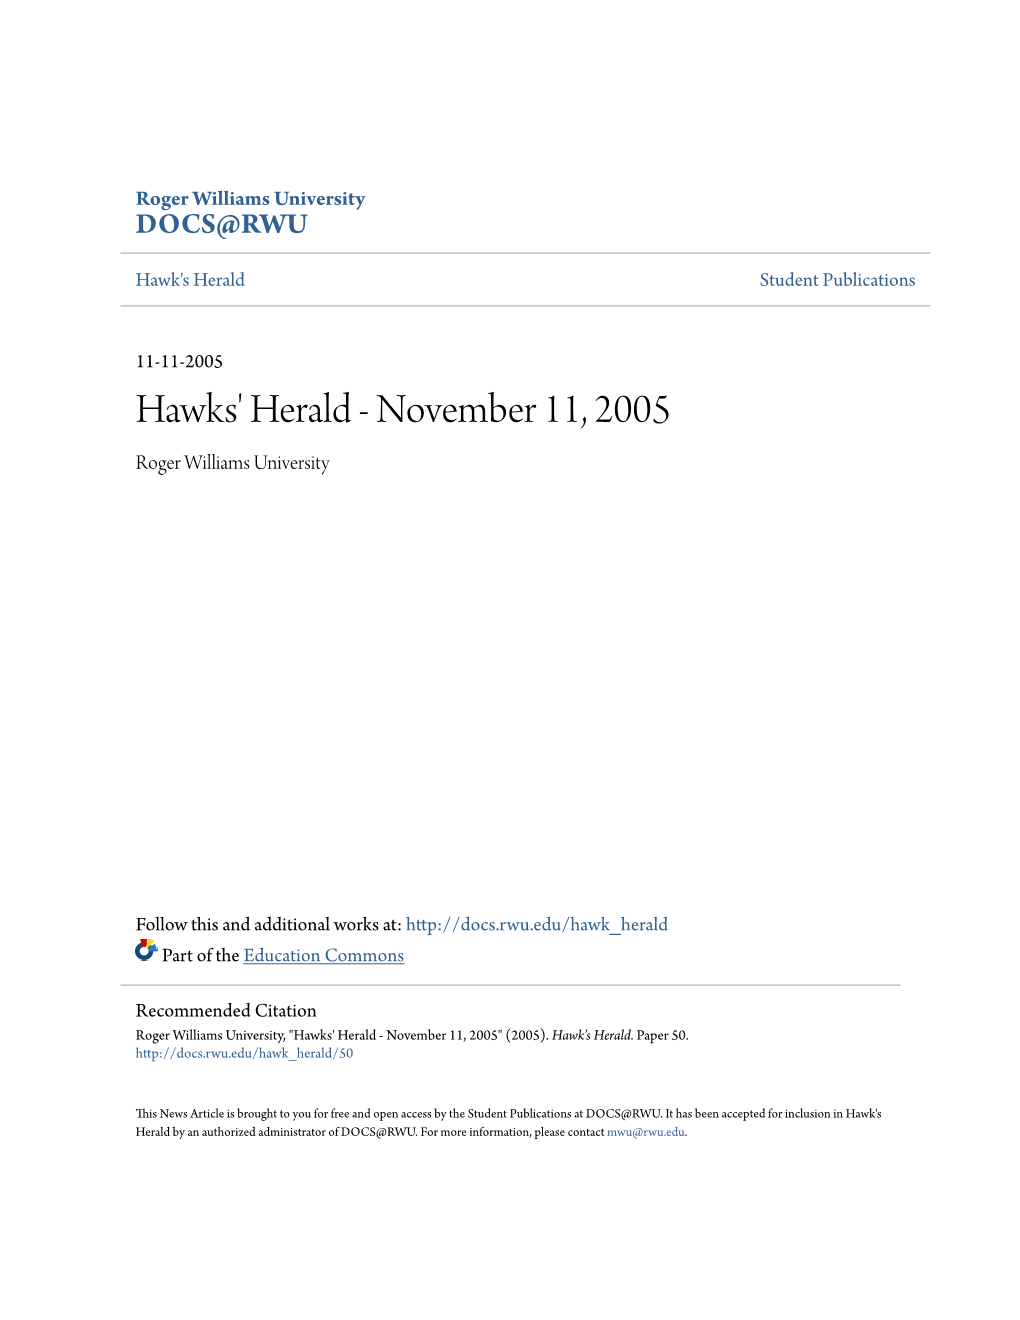 Hawks' Herald - November 11, 2005 Roger Williams University